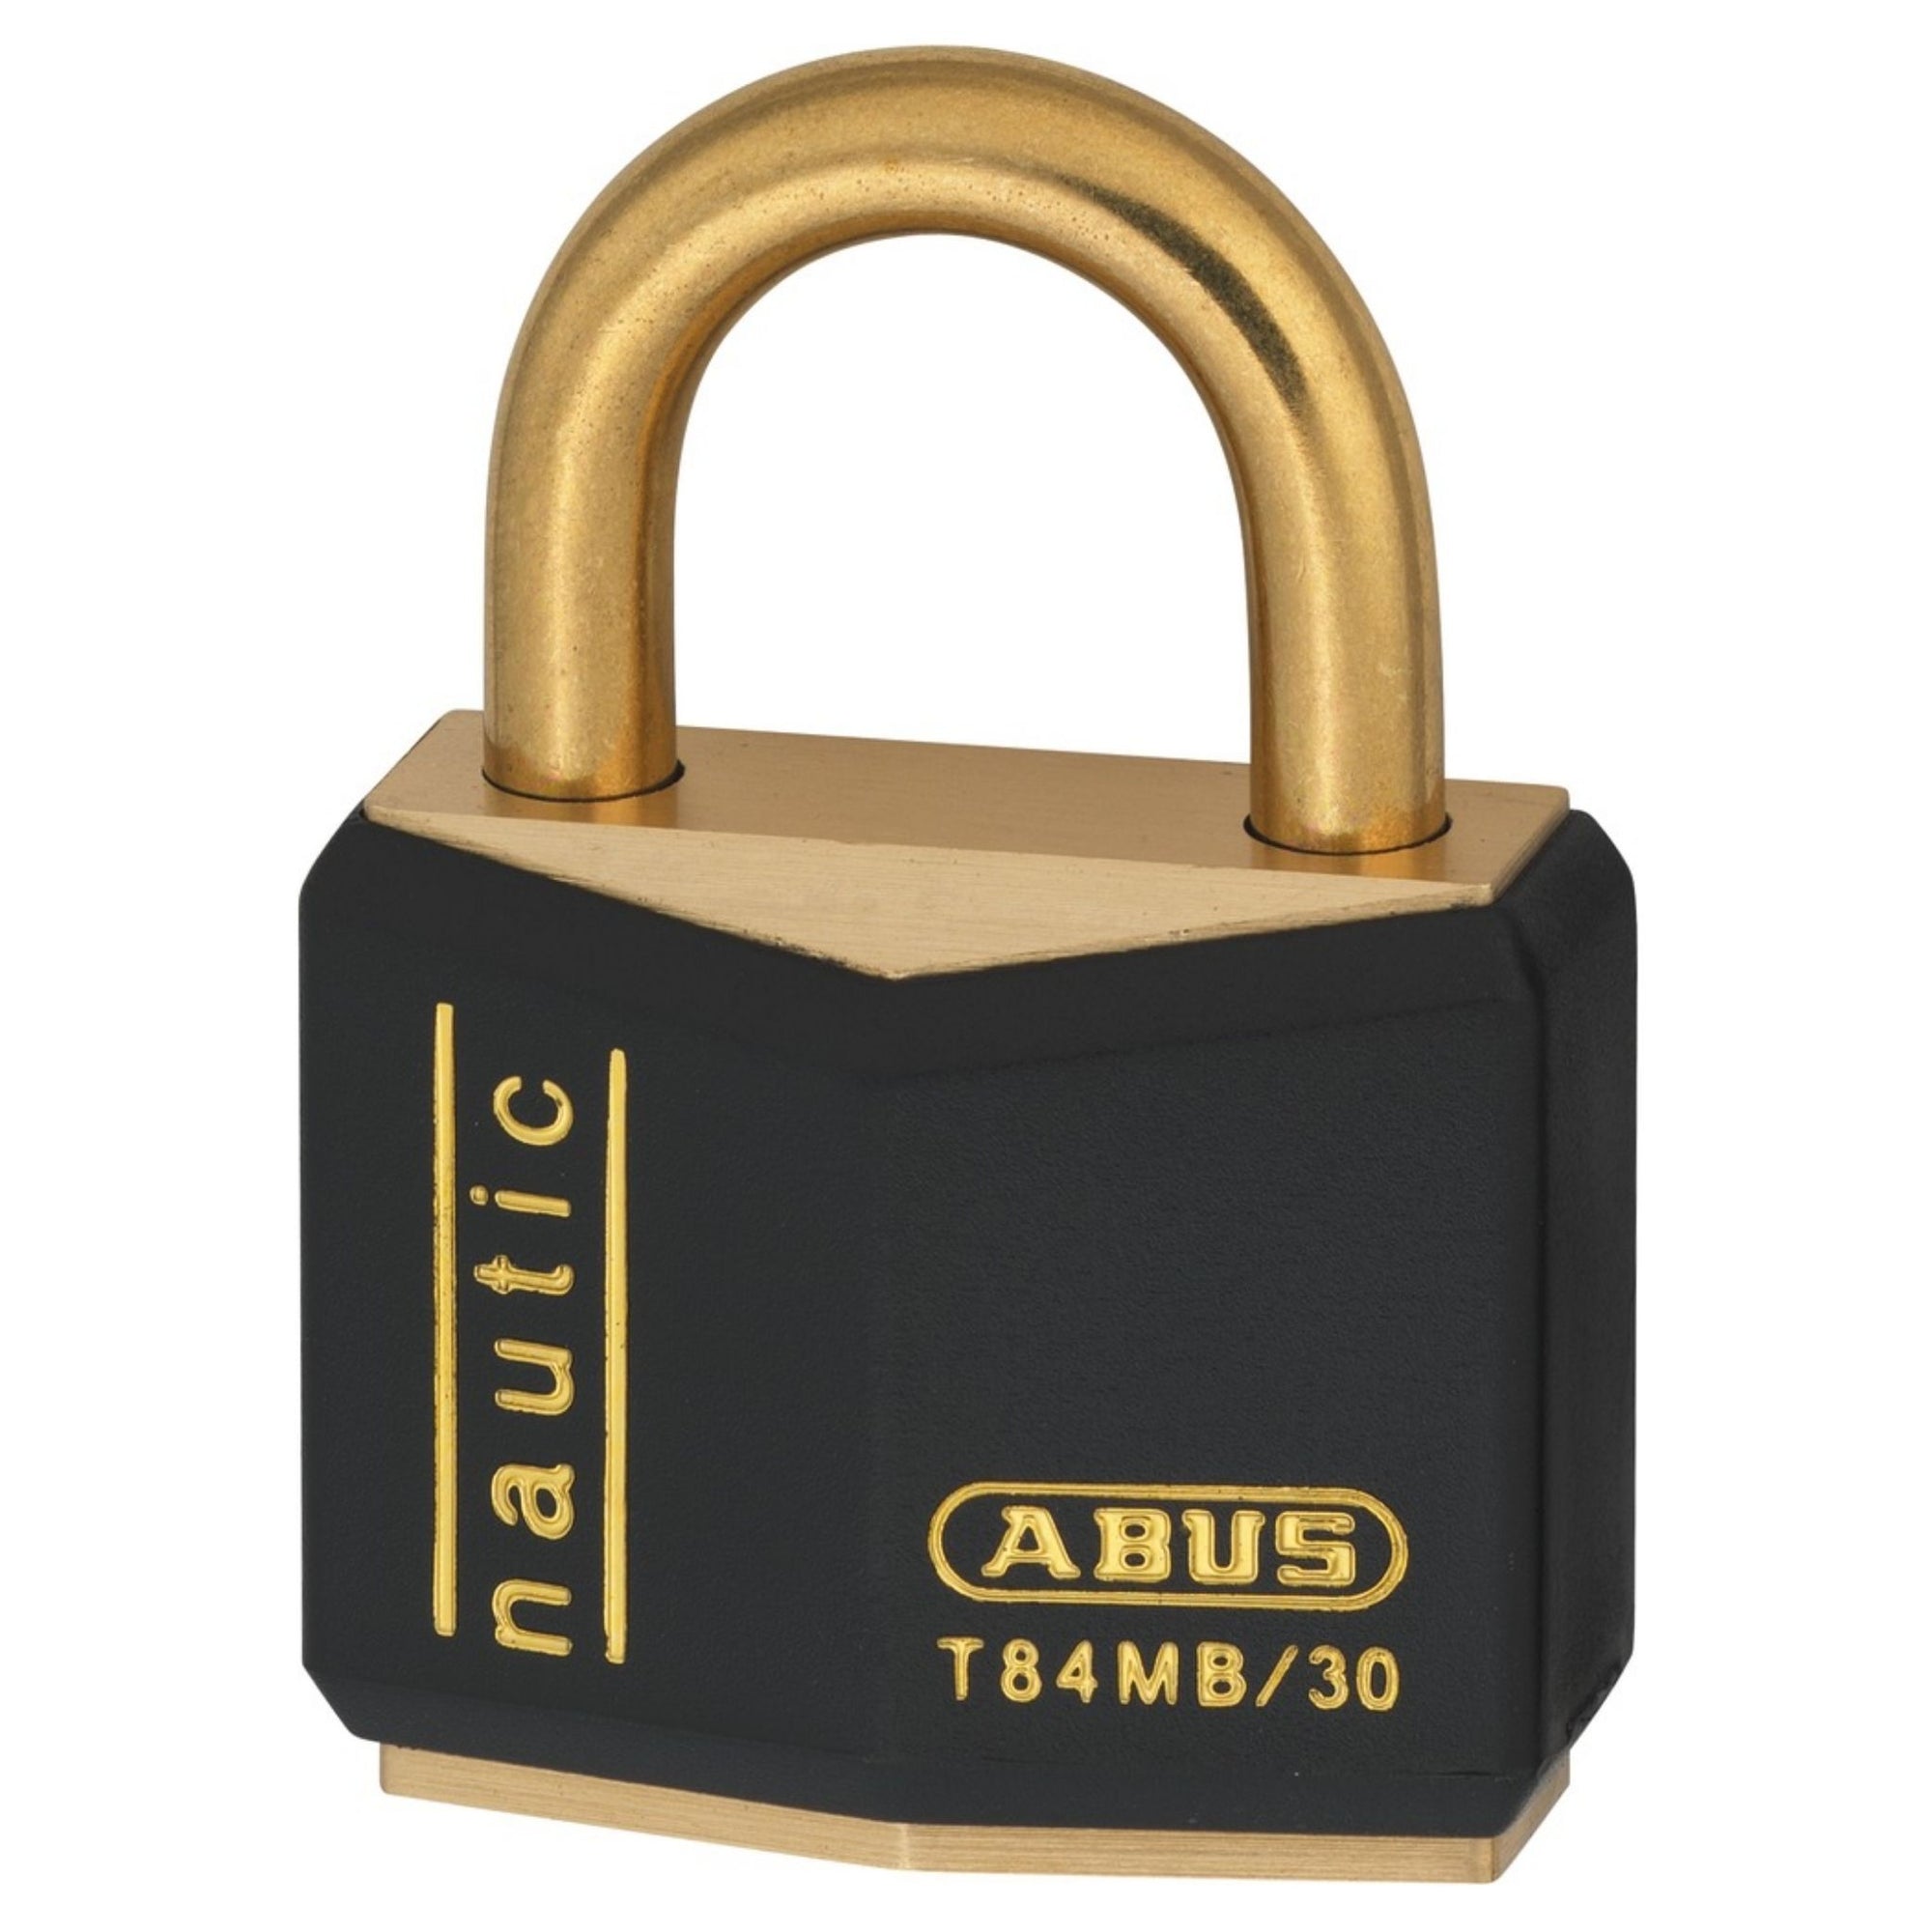 Abus T84MB/30 KA 8301 Weatherproof Brass Padlock Keyed Alike to Match Existing Key# KA8301 - The Lock Source